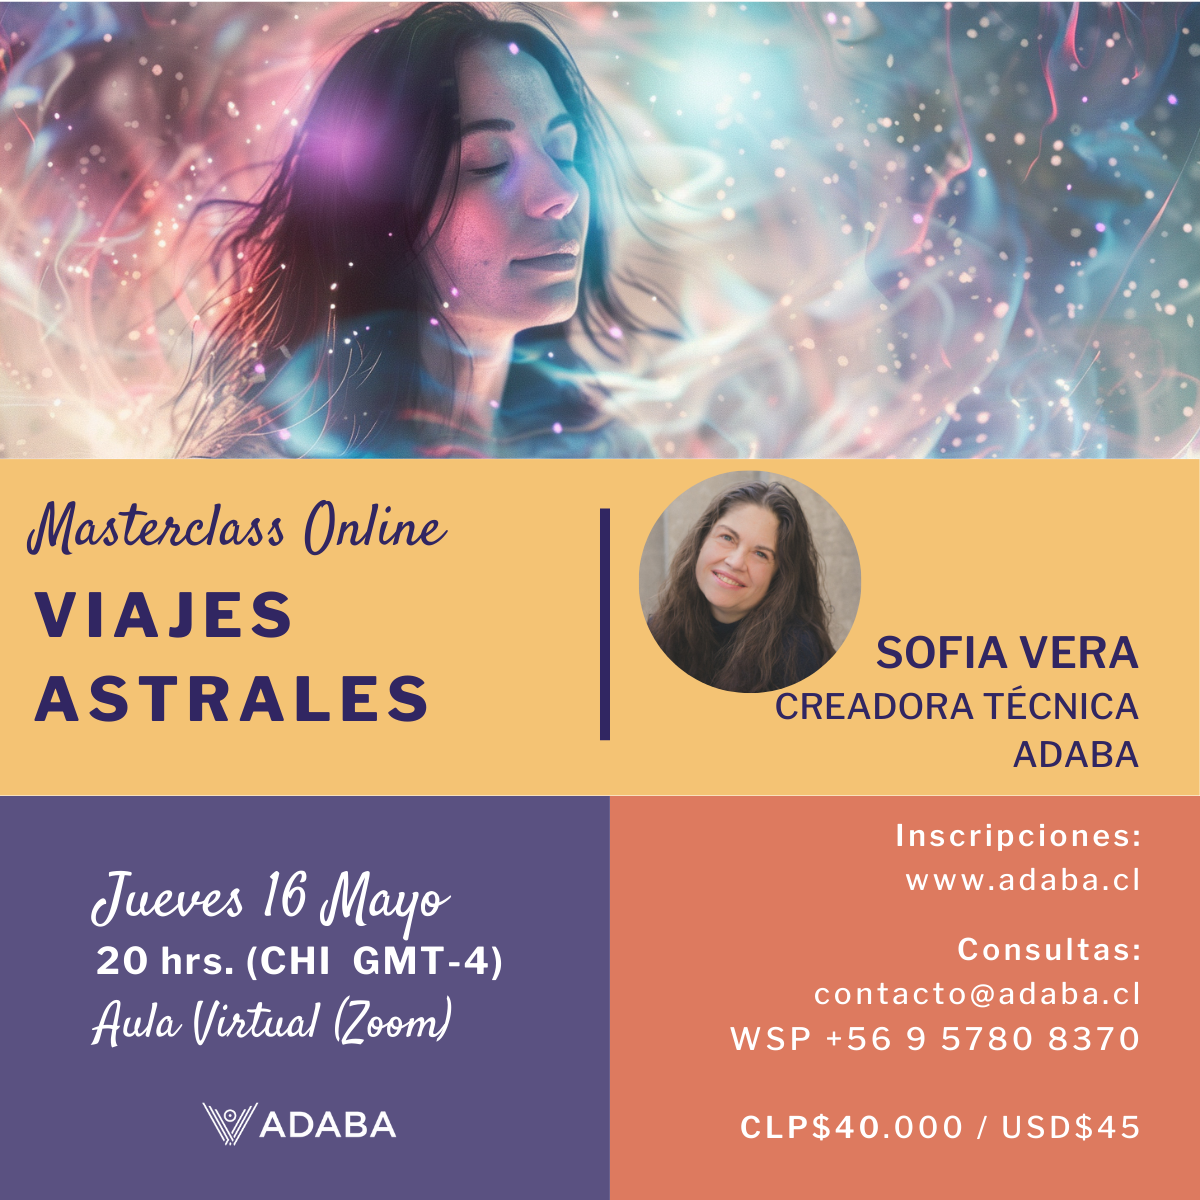 Masterclass Viajes Astrales ➰ - 16 Mayo